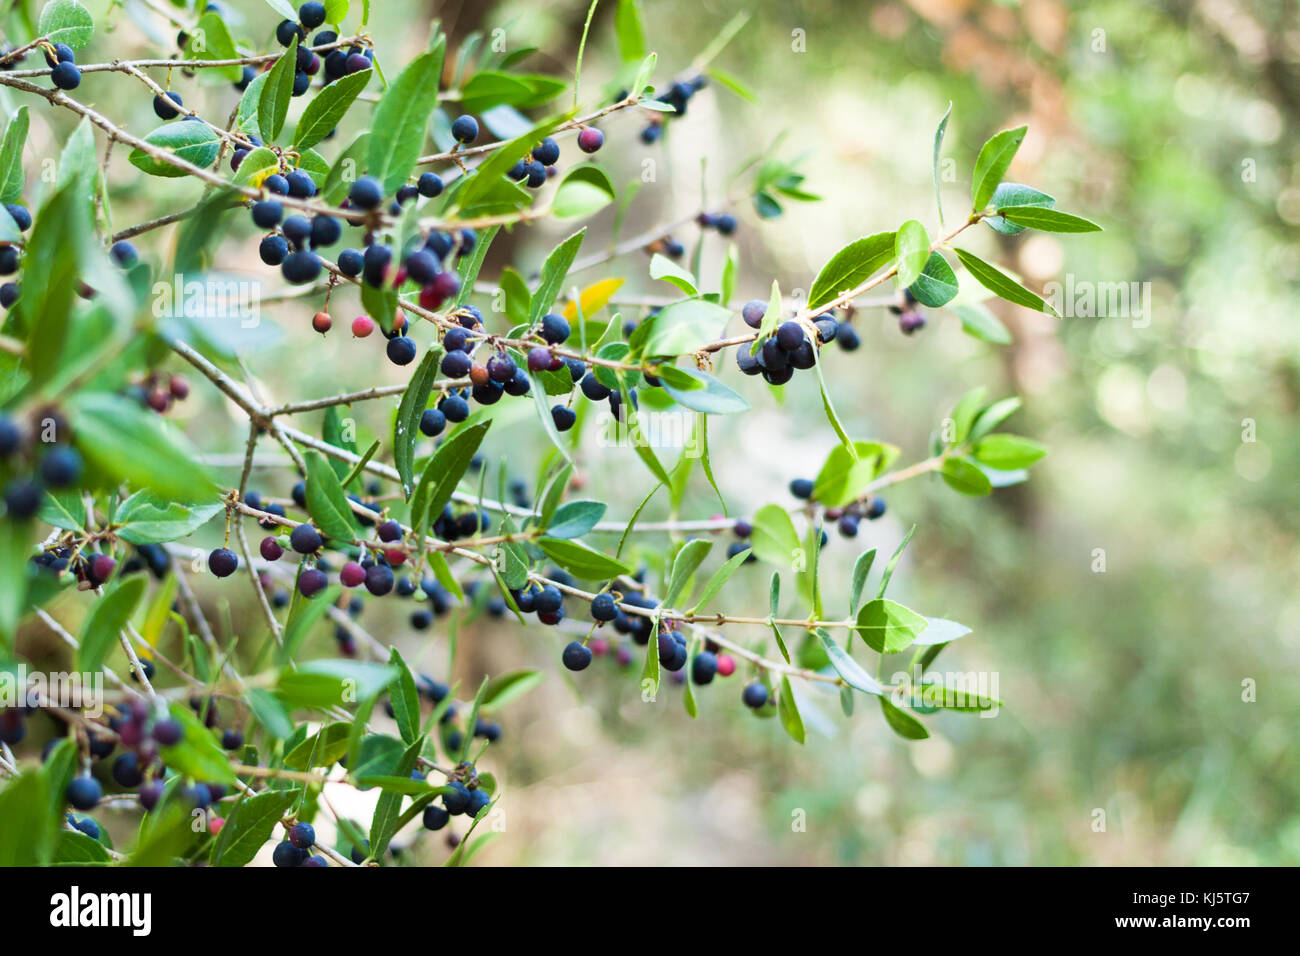 Blackthorn or Prunus spinosa fruits Stock Photo